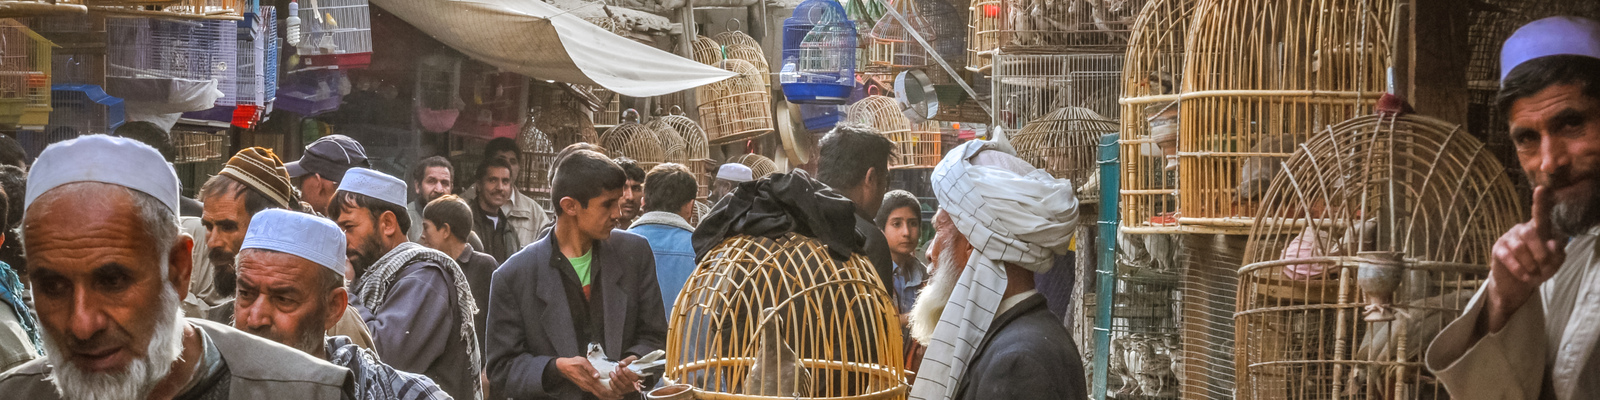 Kabul Market Shutterstock 562892209